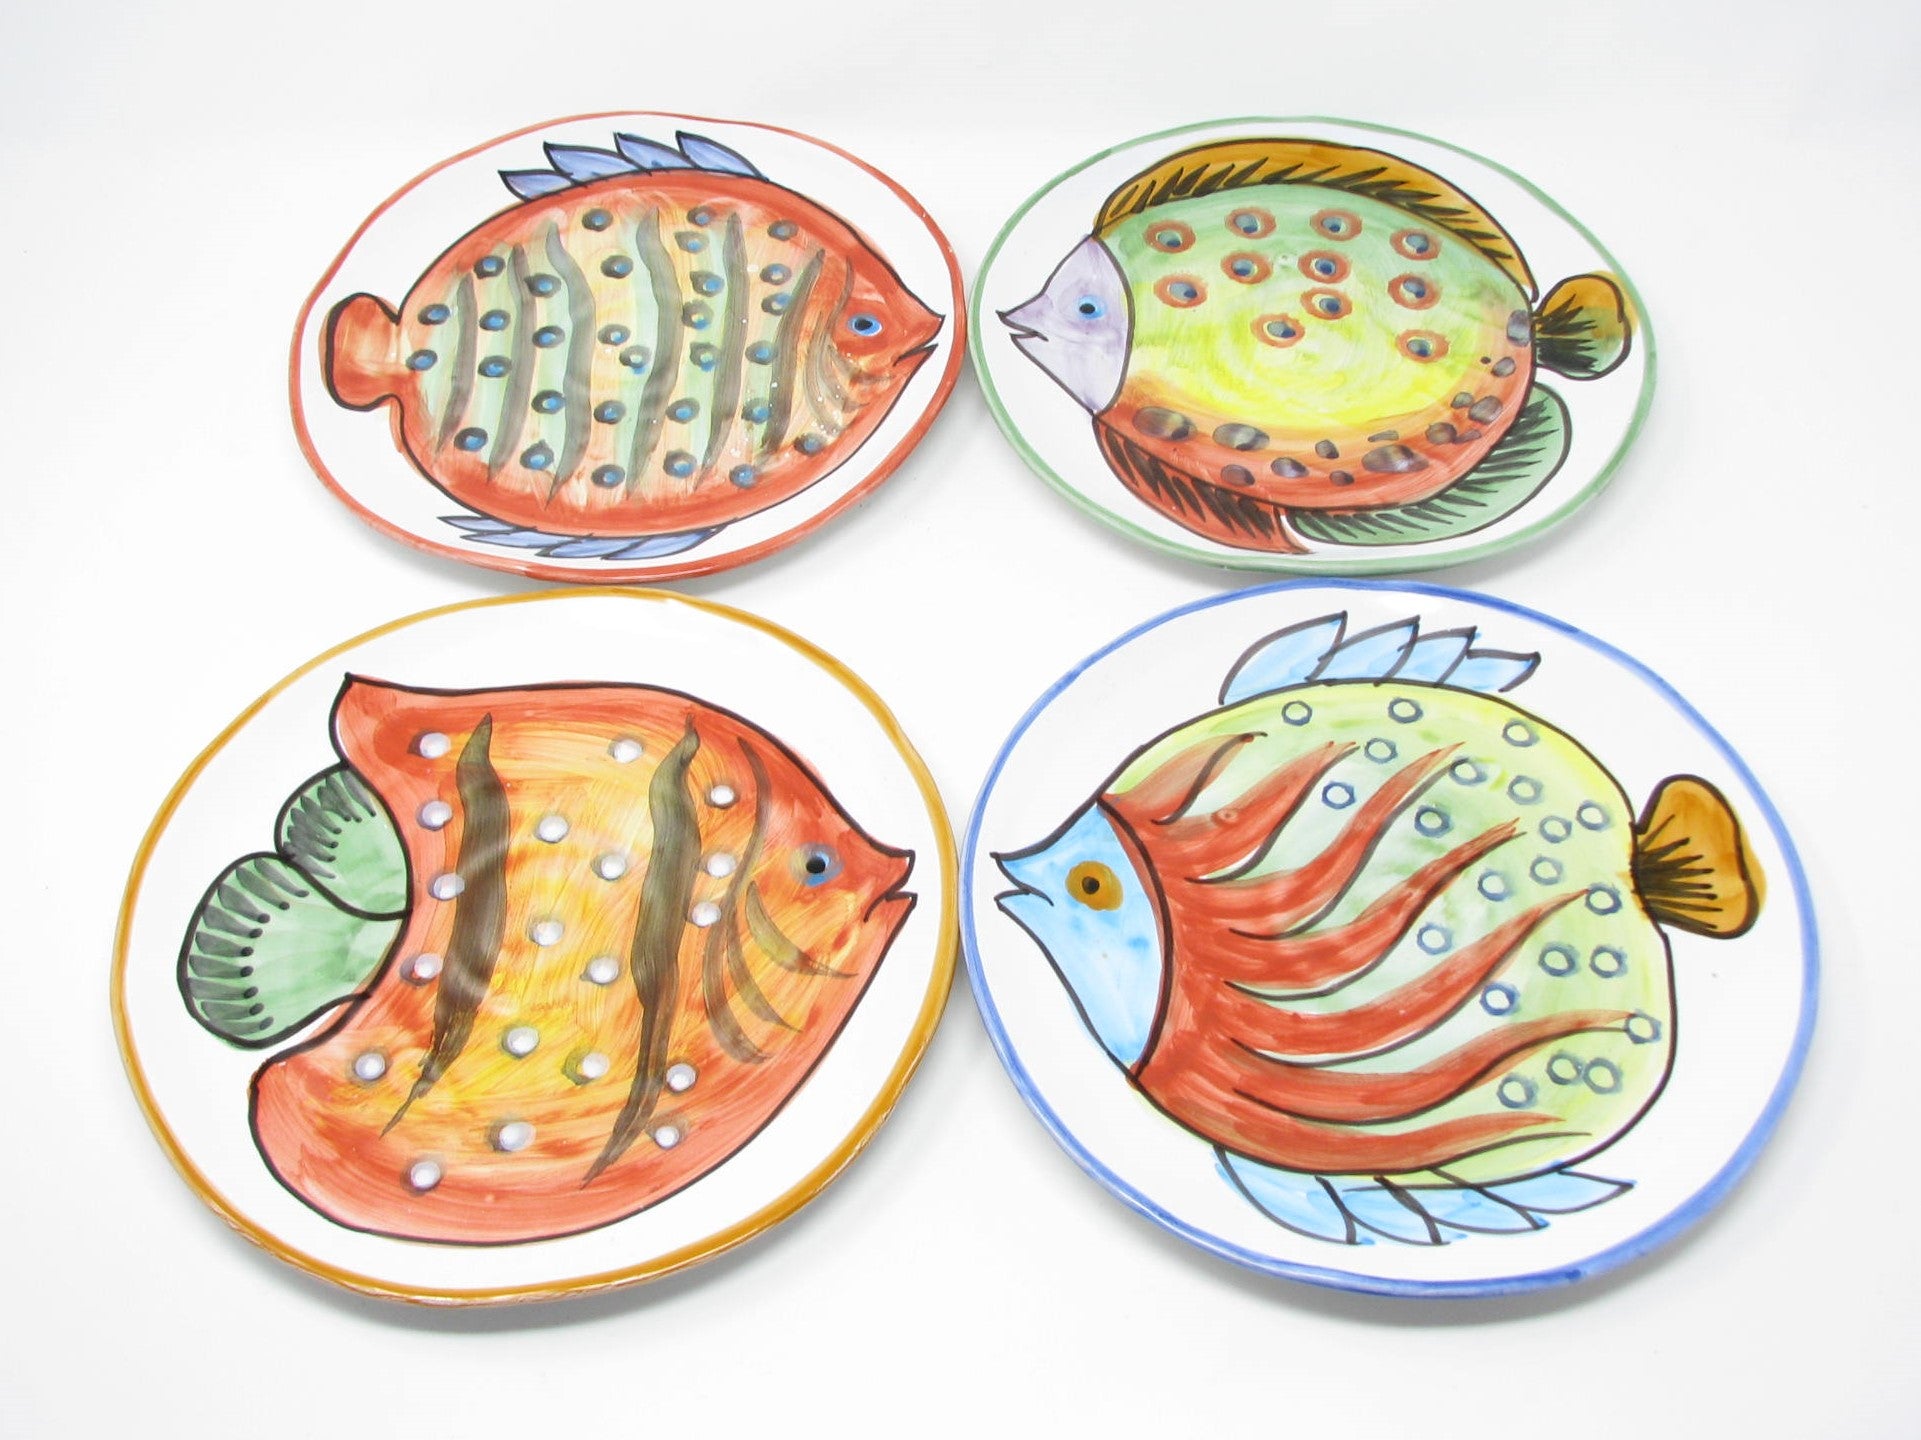 edgebrookhouse - Vintage Vietri Acquario Italian Pottery Salad Plates with Multicolor Fish Design - 4 Pieces